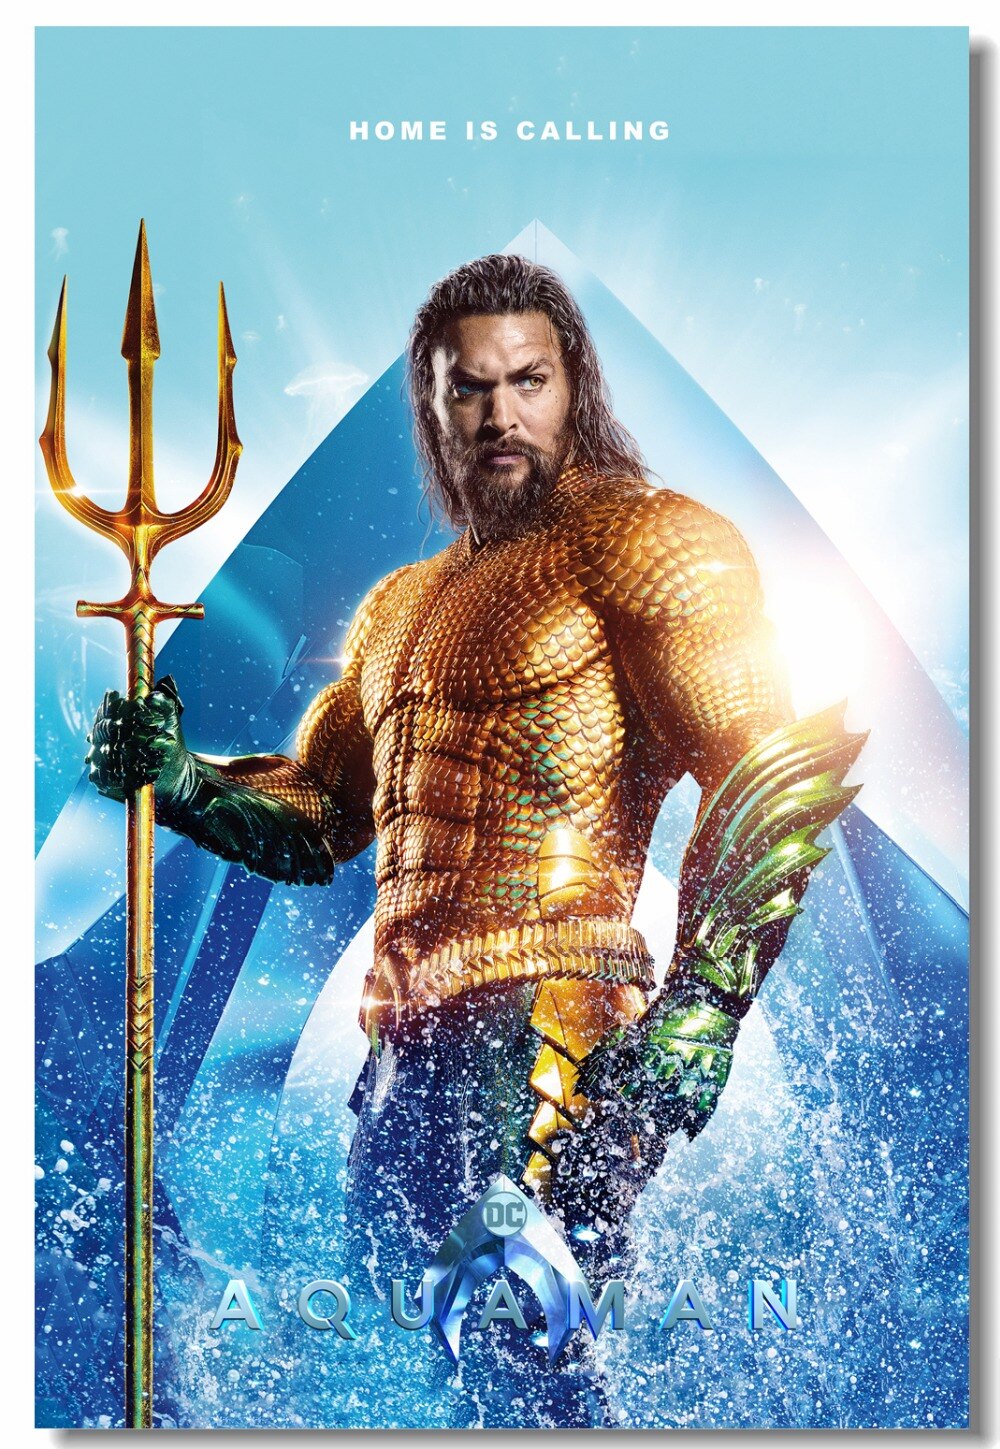 Aquaman Movie Wallpapers